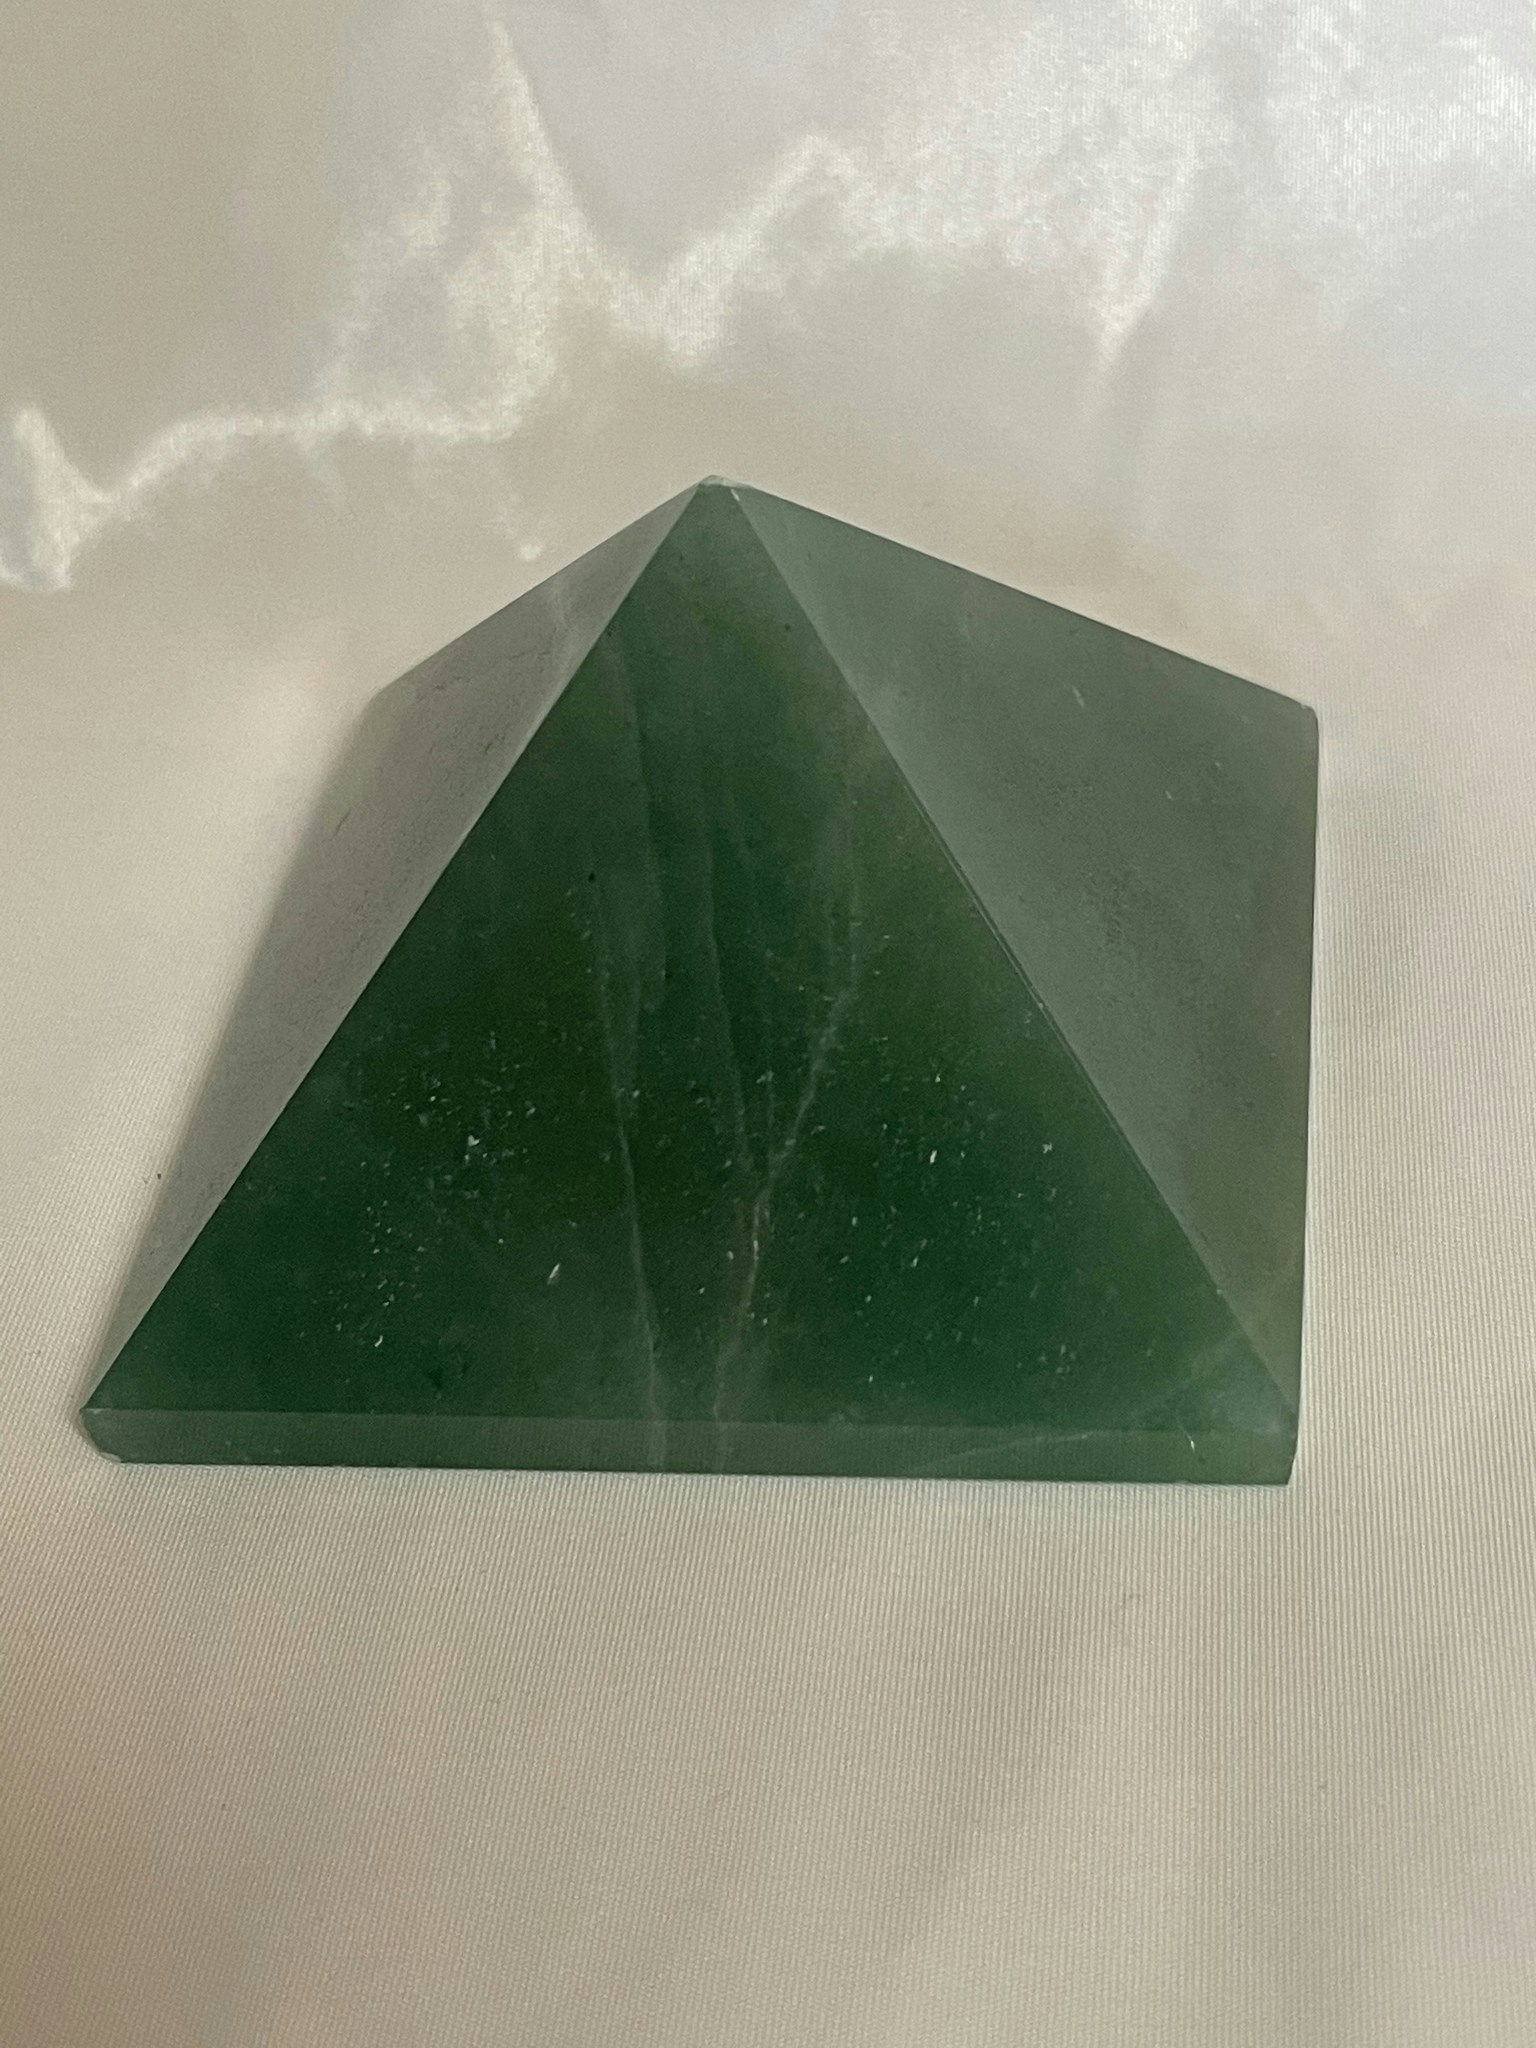 Pyramid i Grön Aventurin 6*6 cm (180g)